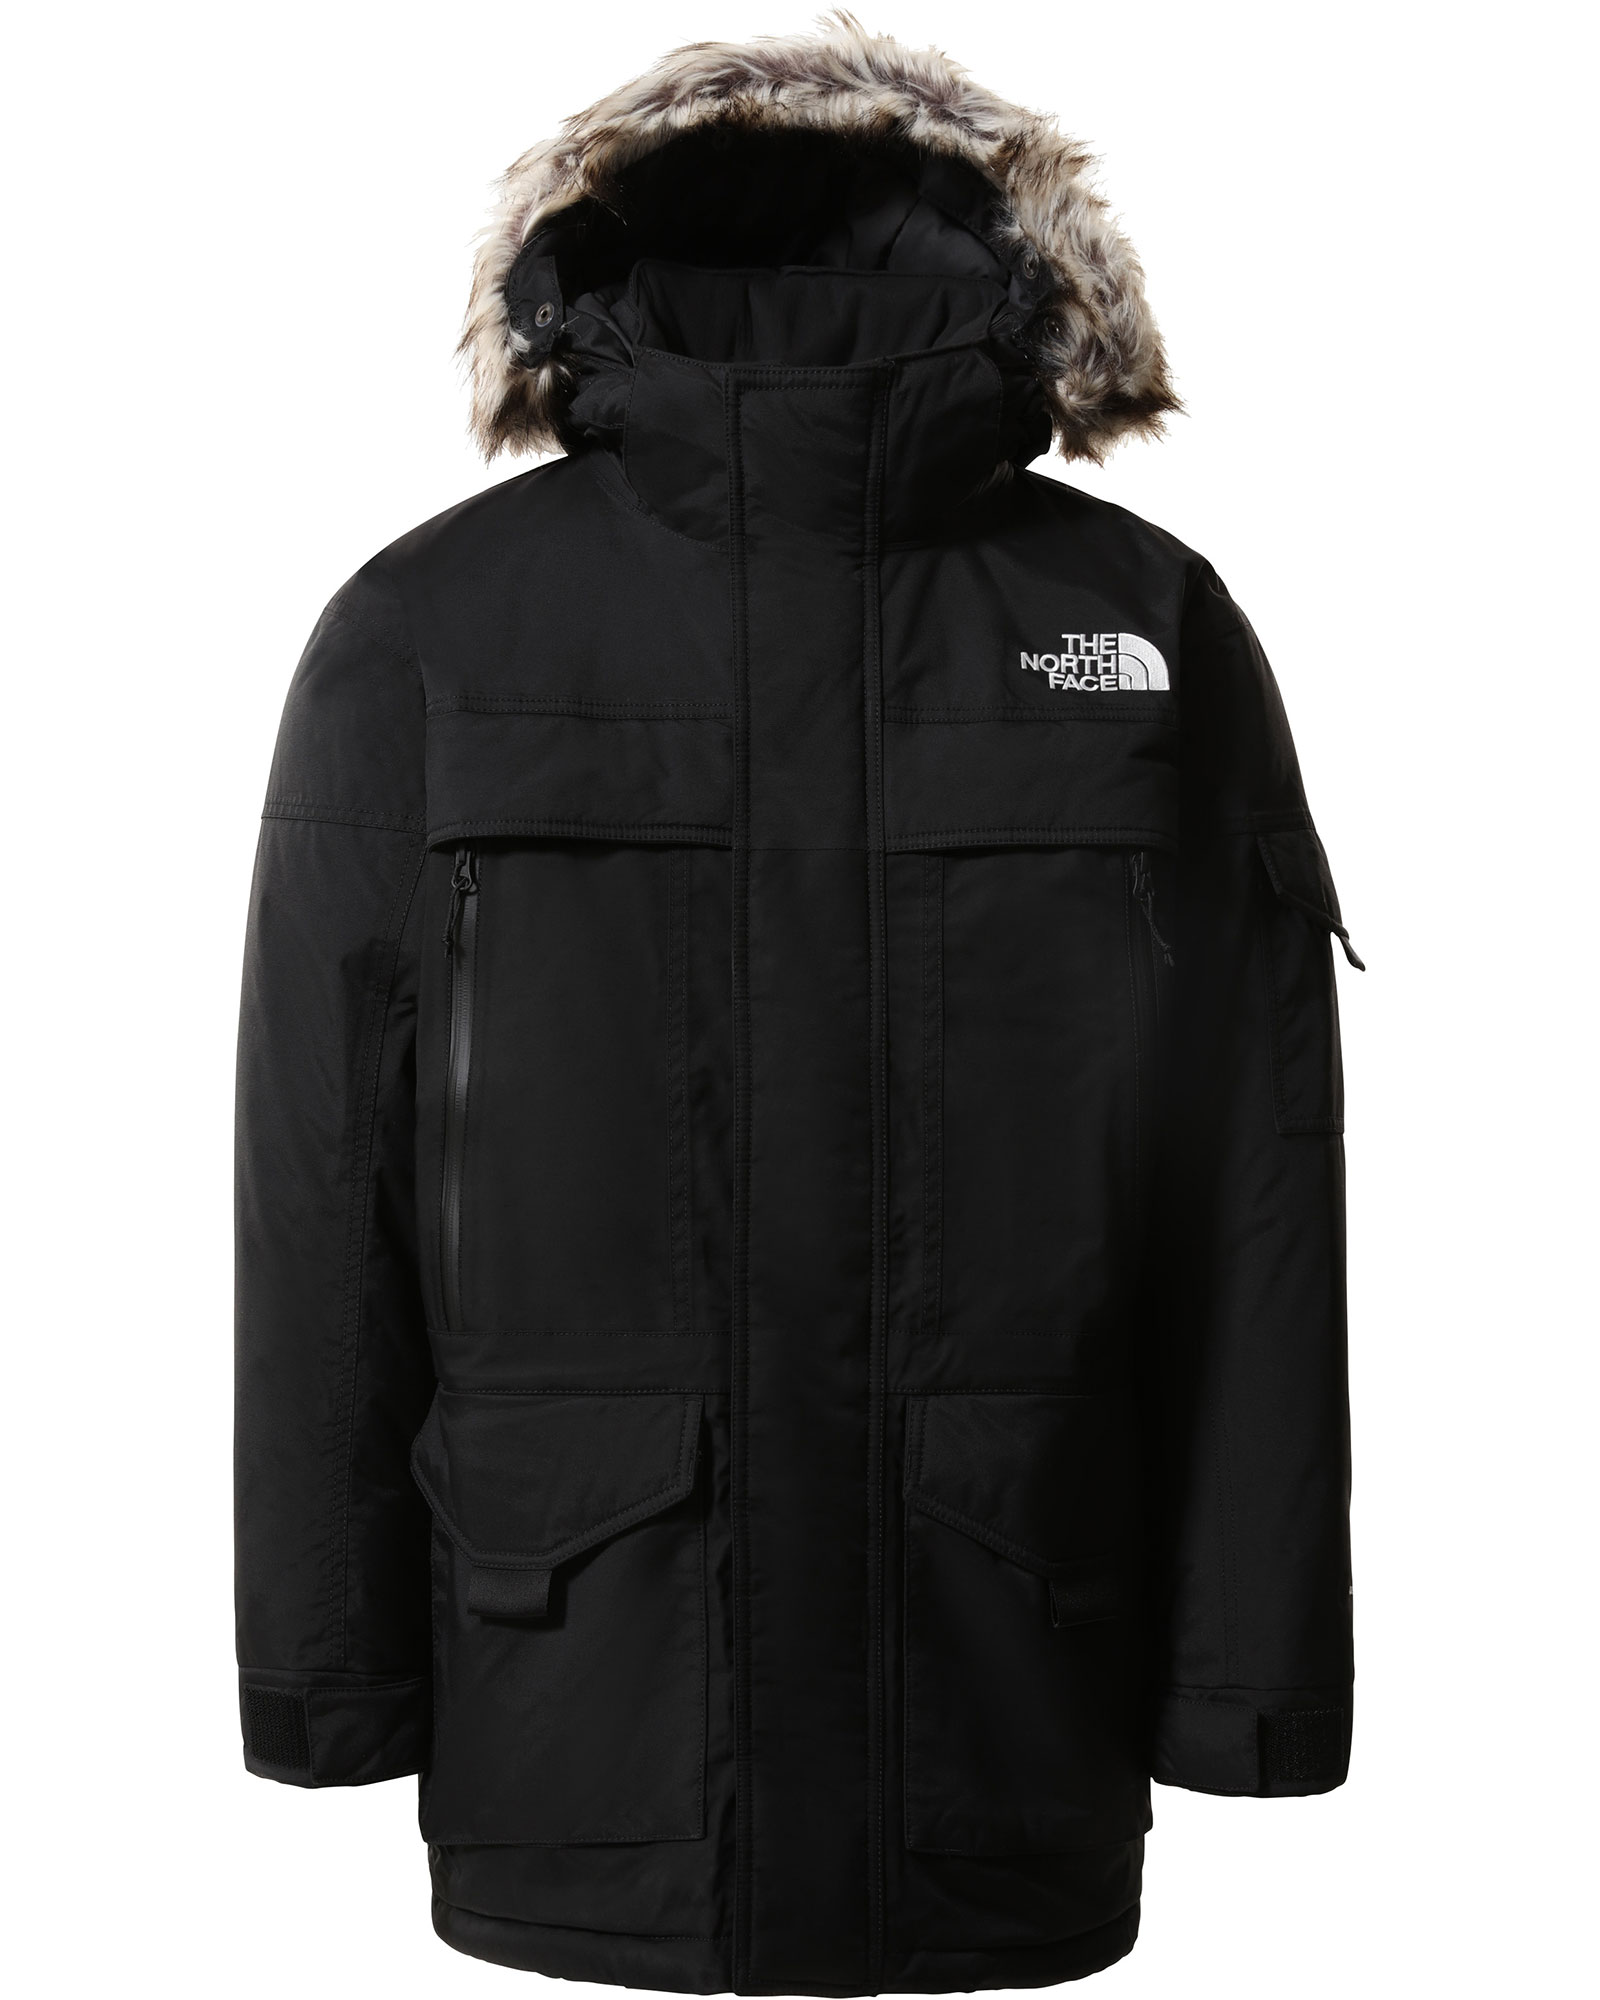 The North Face McMurdo 2 Men’s Parka Jacket - TNF Black/TNF White Logo M